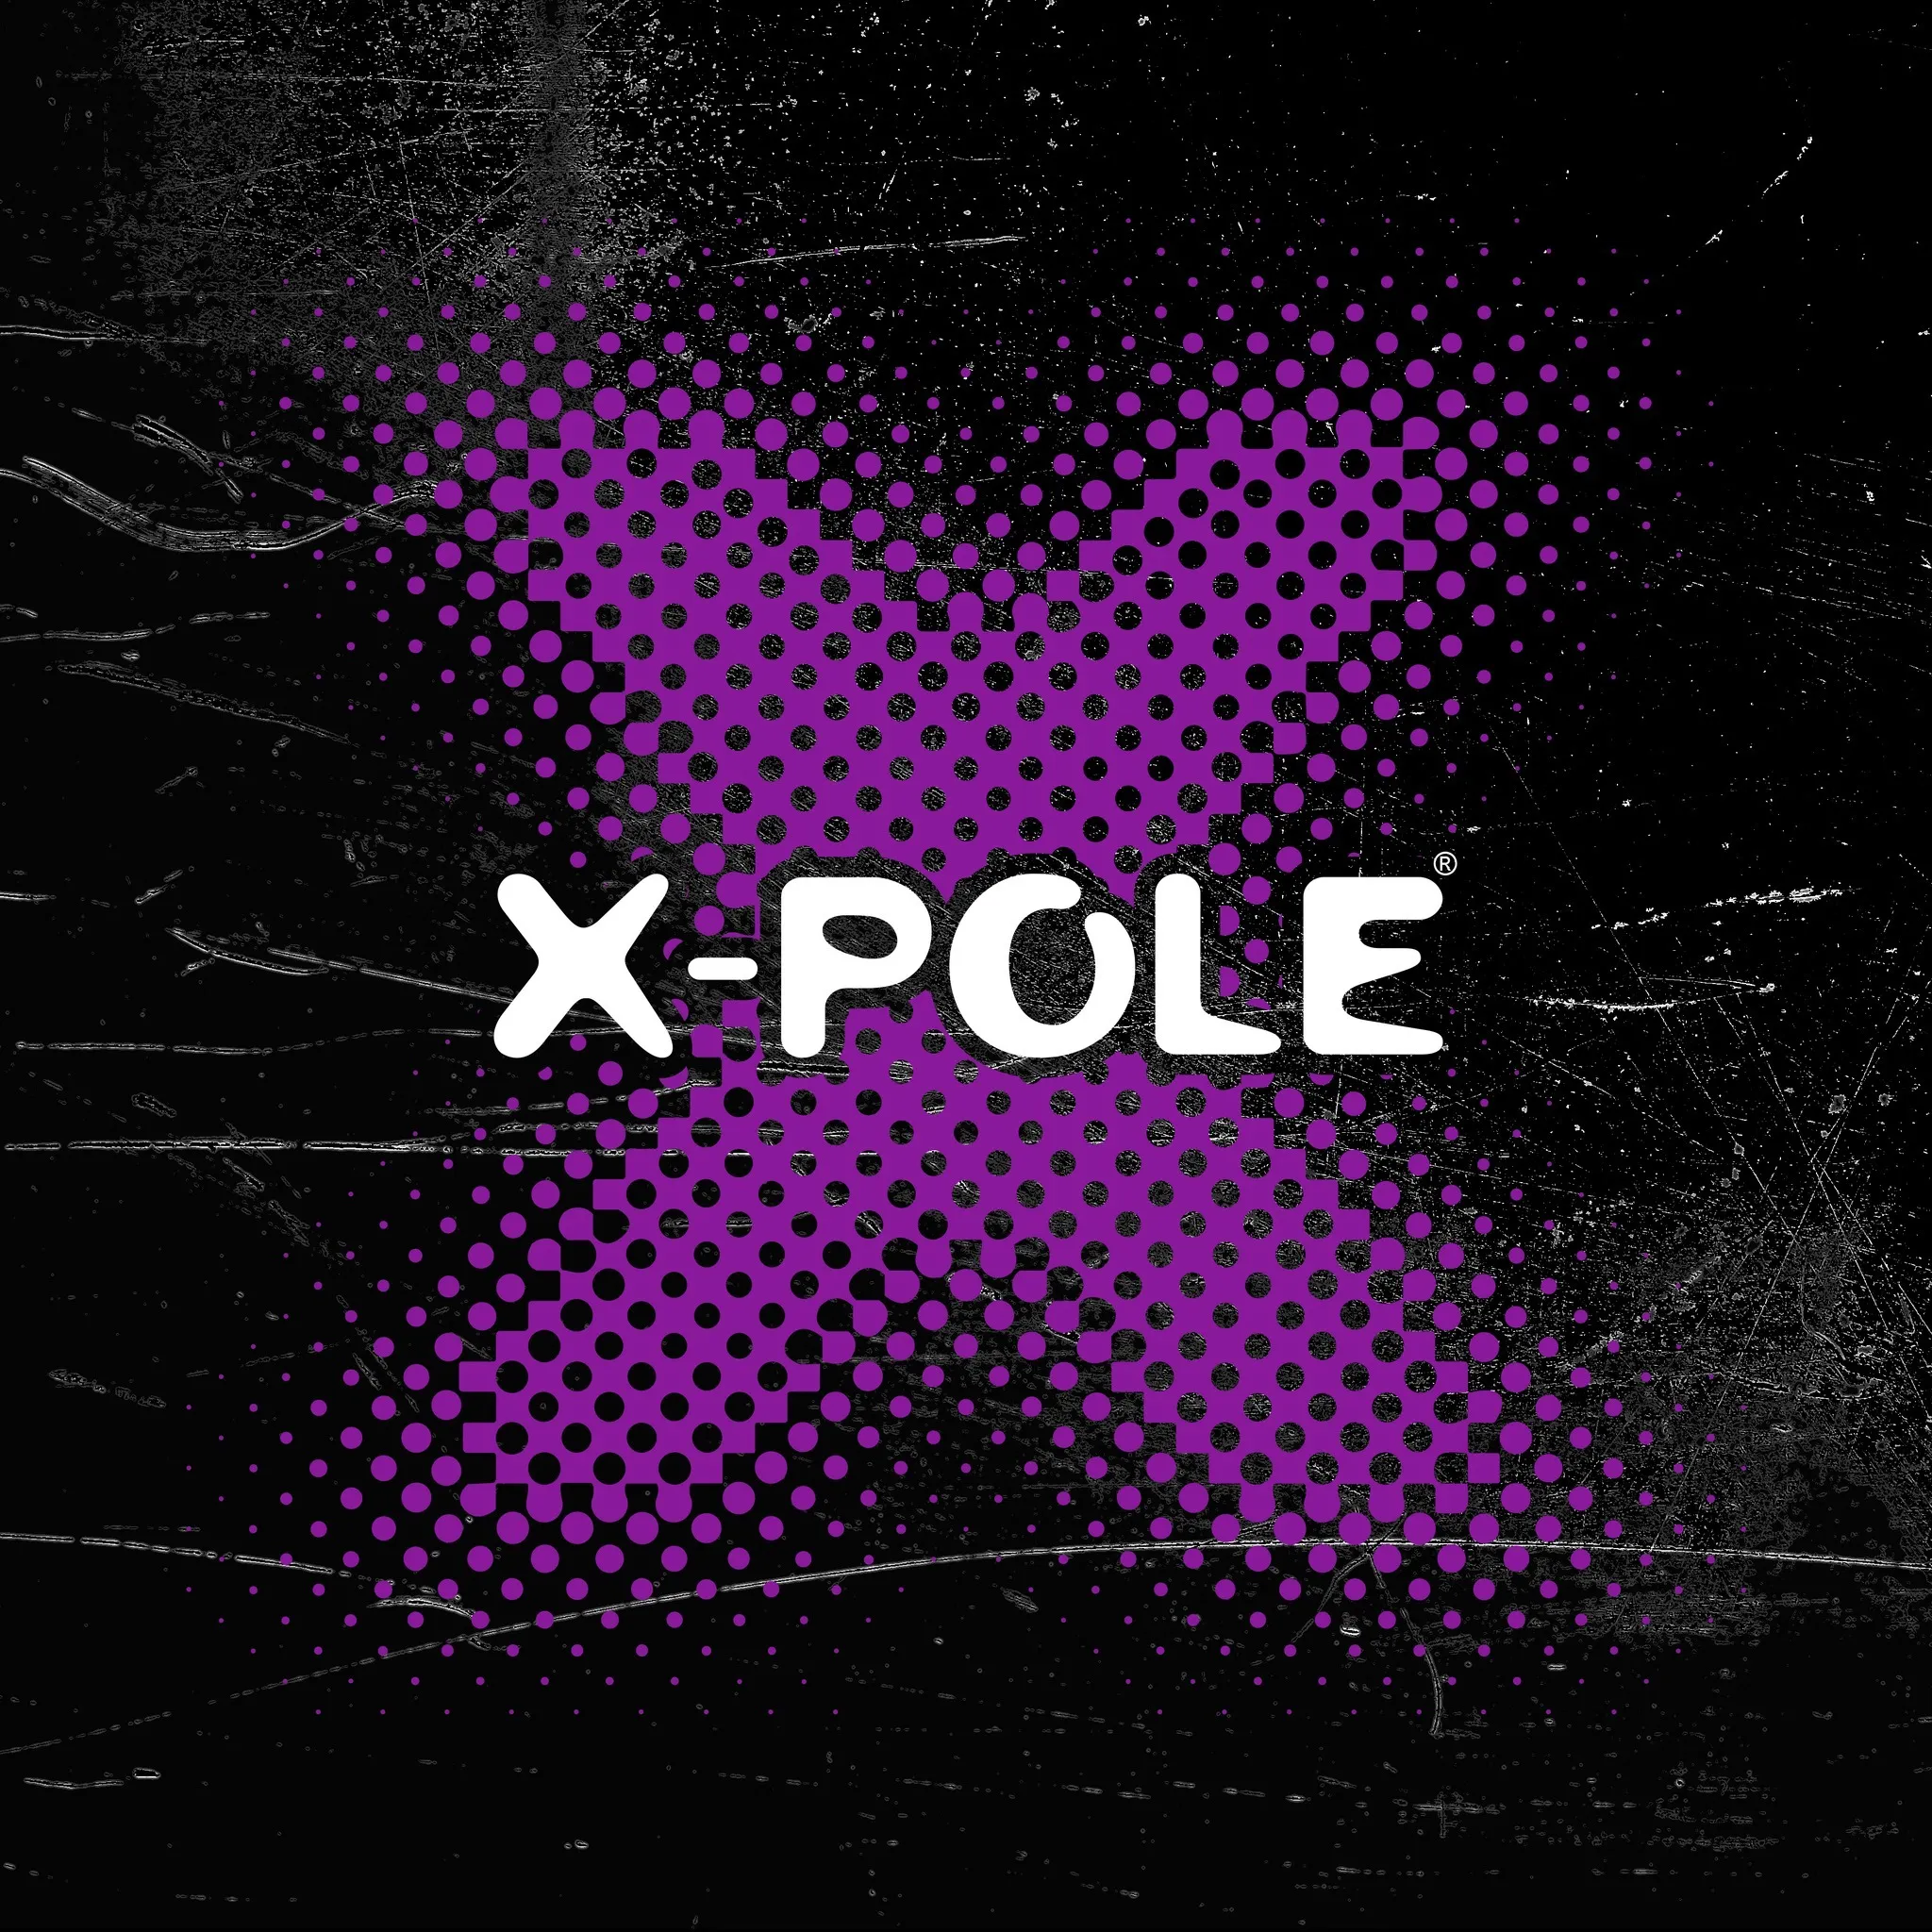 x-pole.co.uk